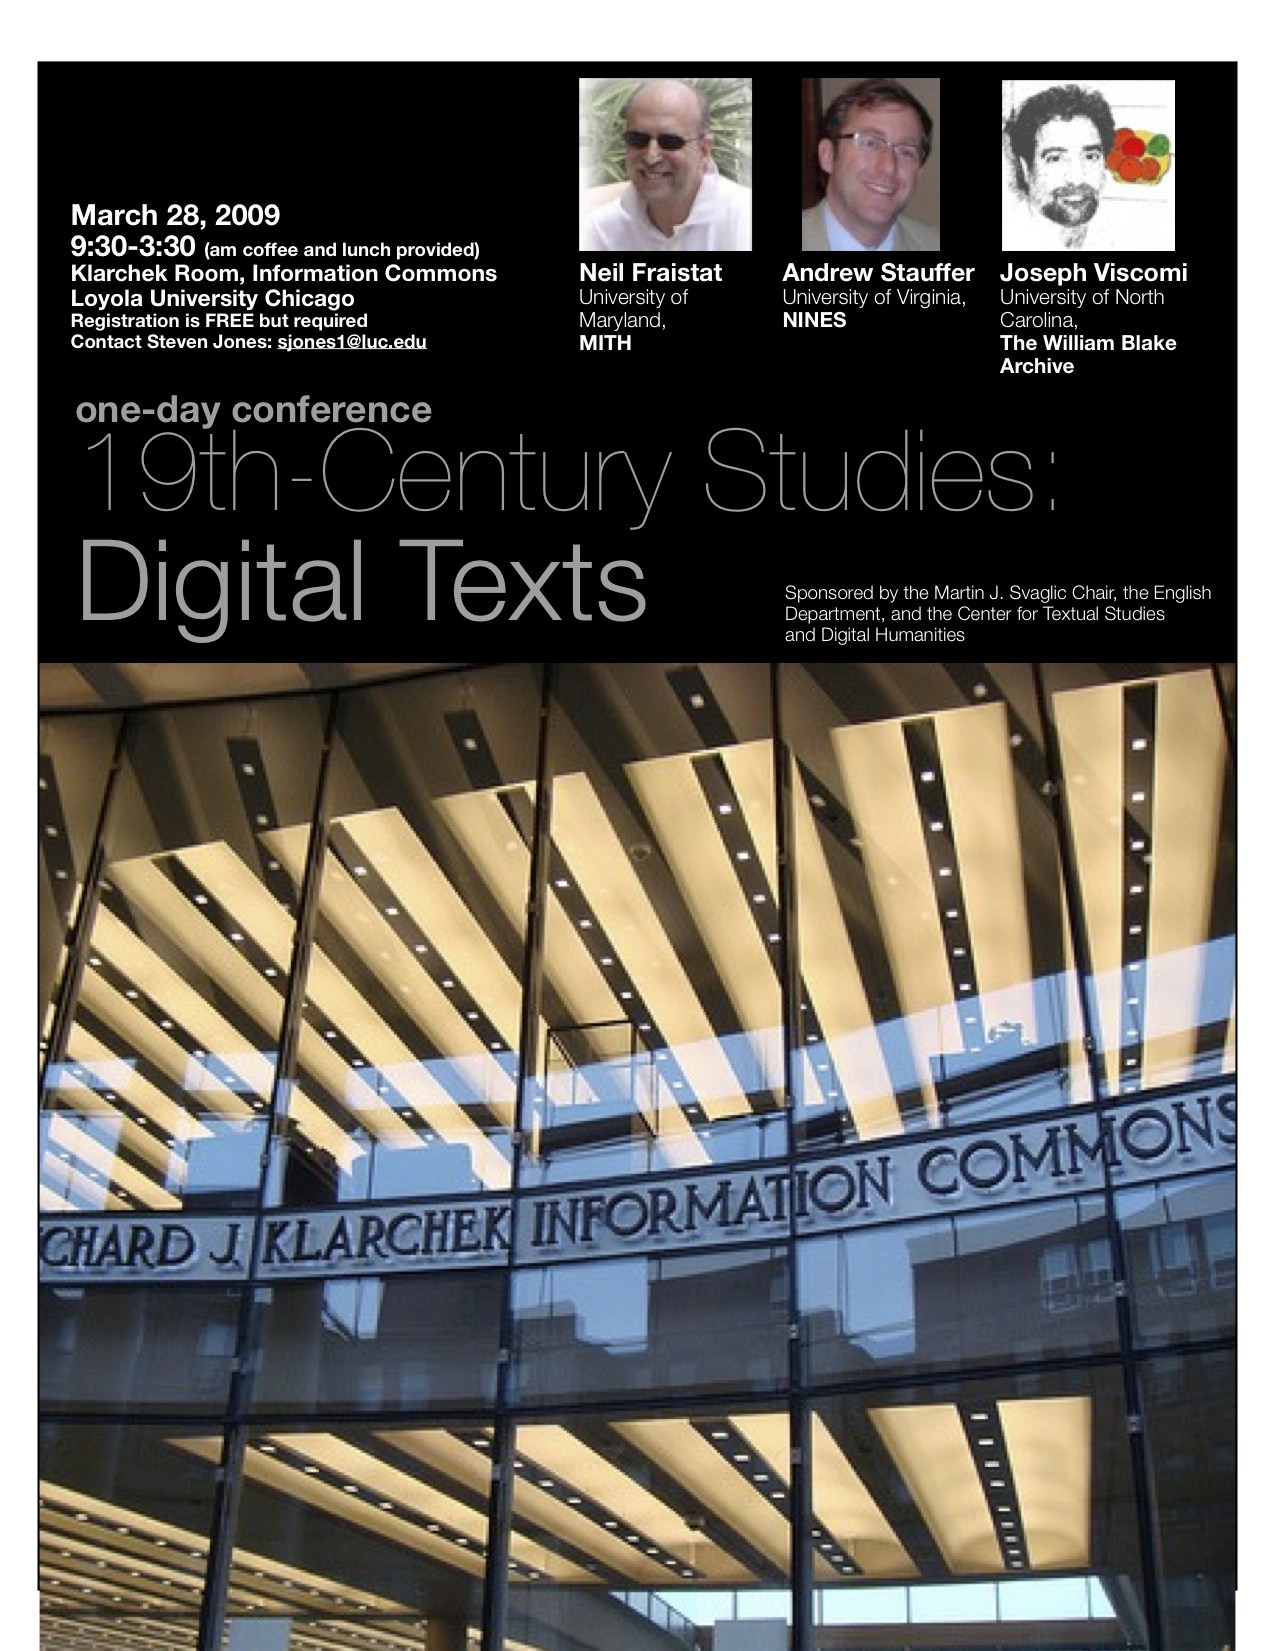 19th Century Studies Digital Texts - Neil Freistat (U Maryland), Andrew Stauffer (U Virginia), Joseph Visconi (U North Carolina, March 28, 2009
